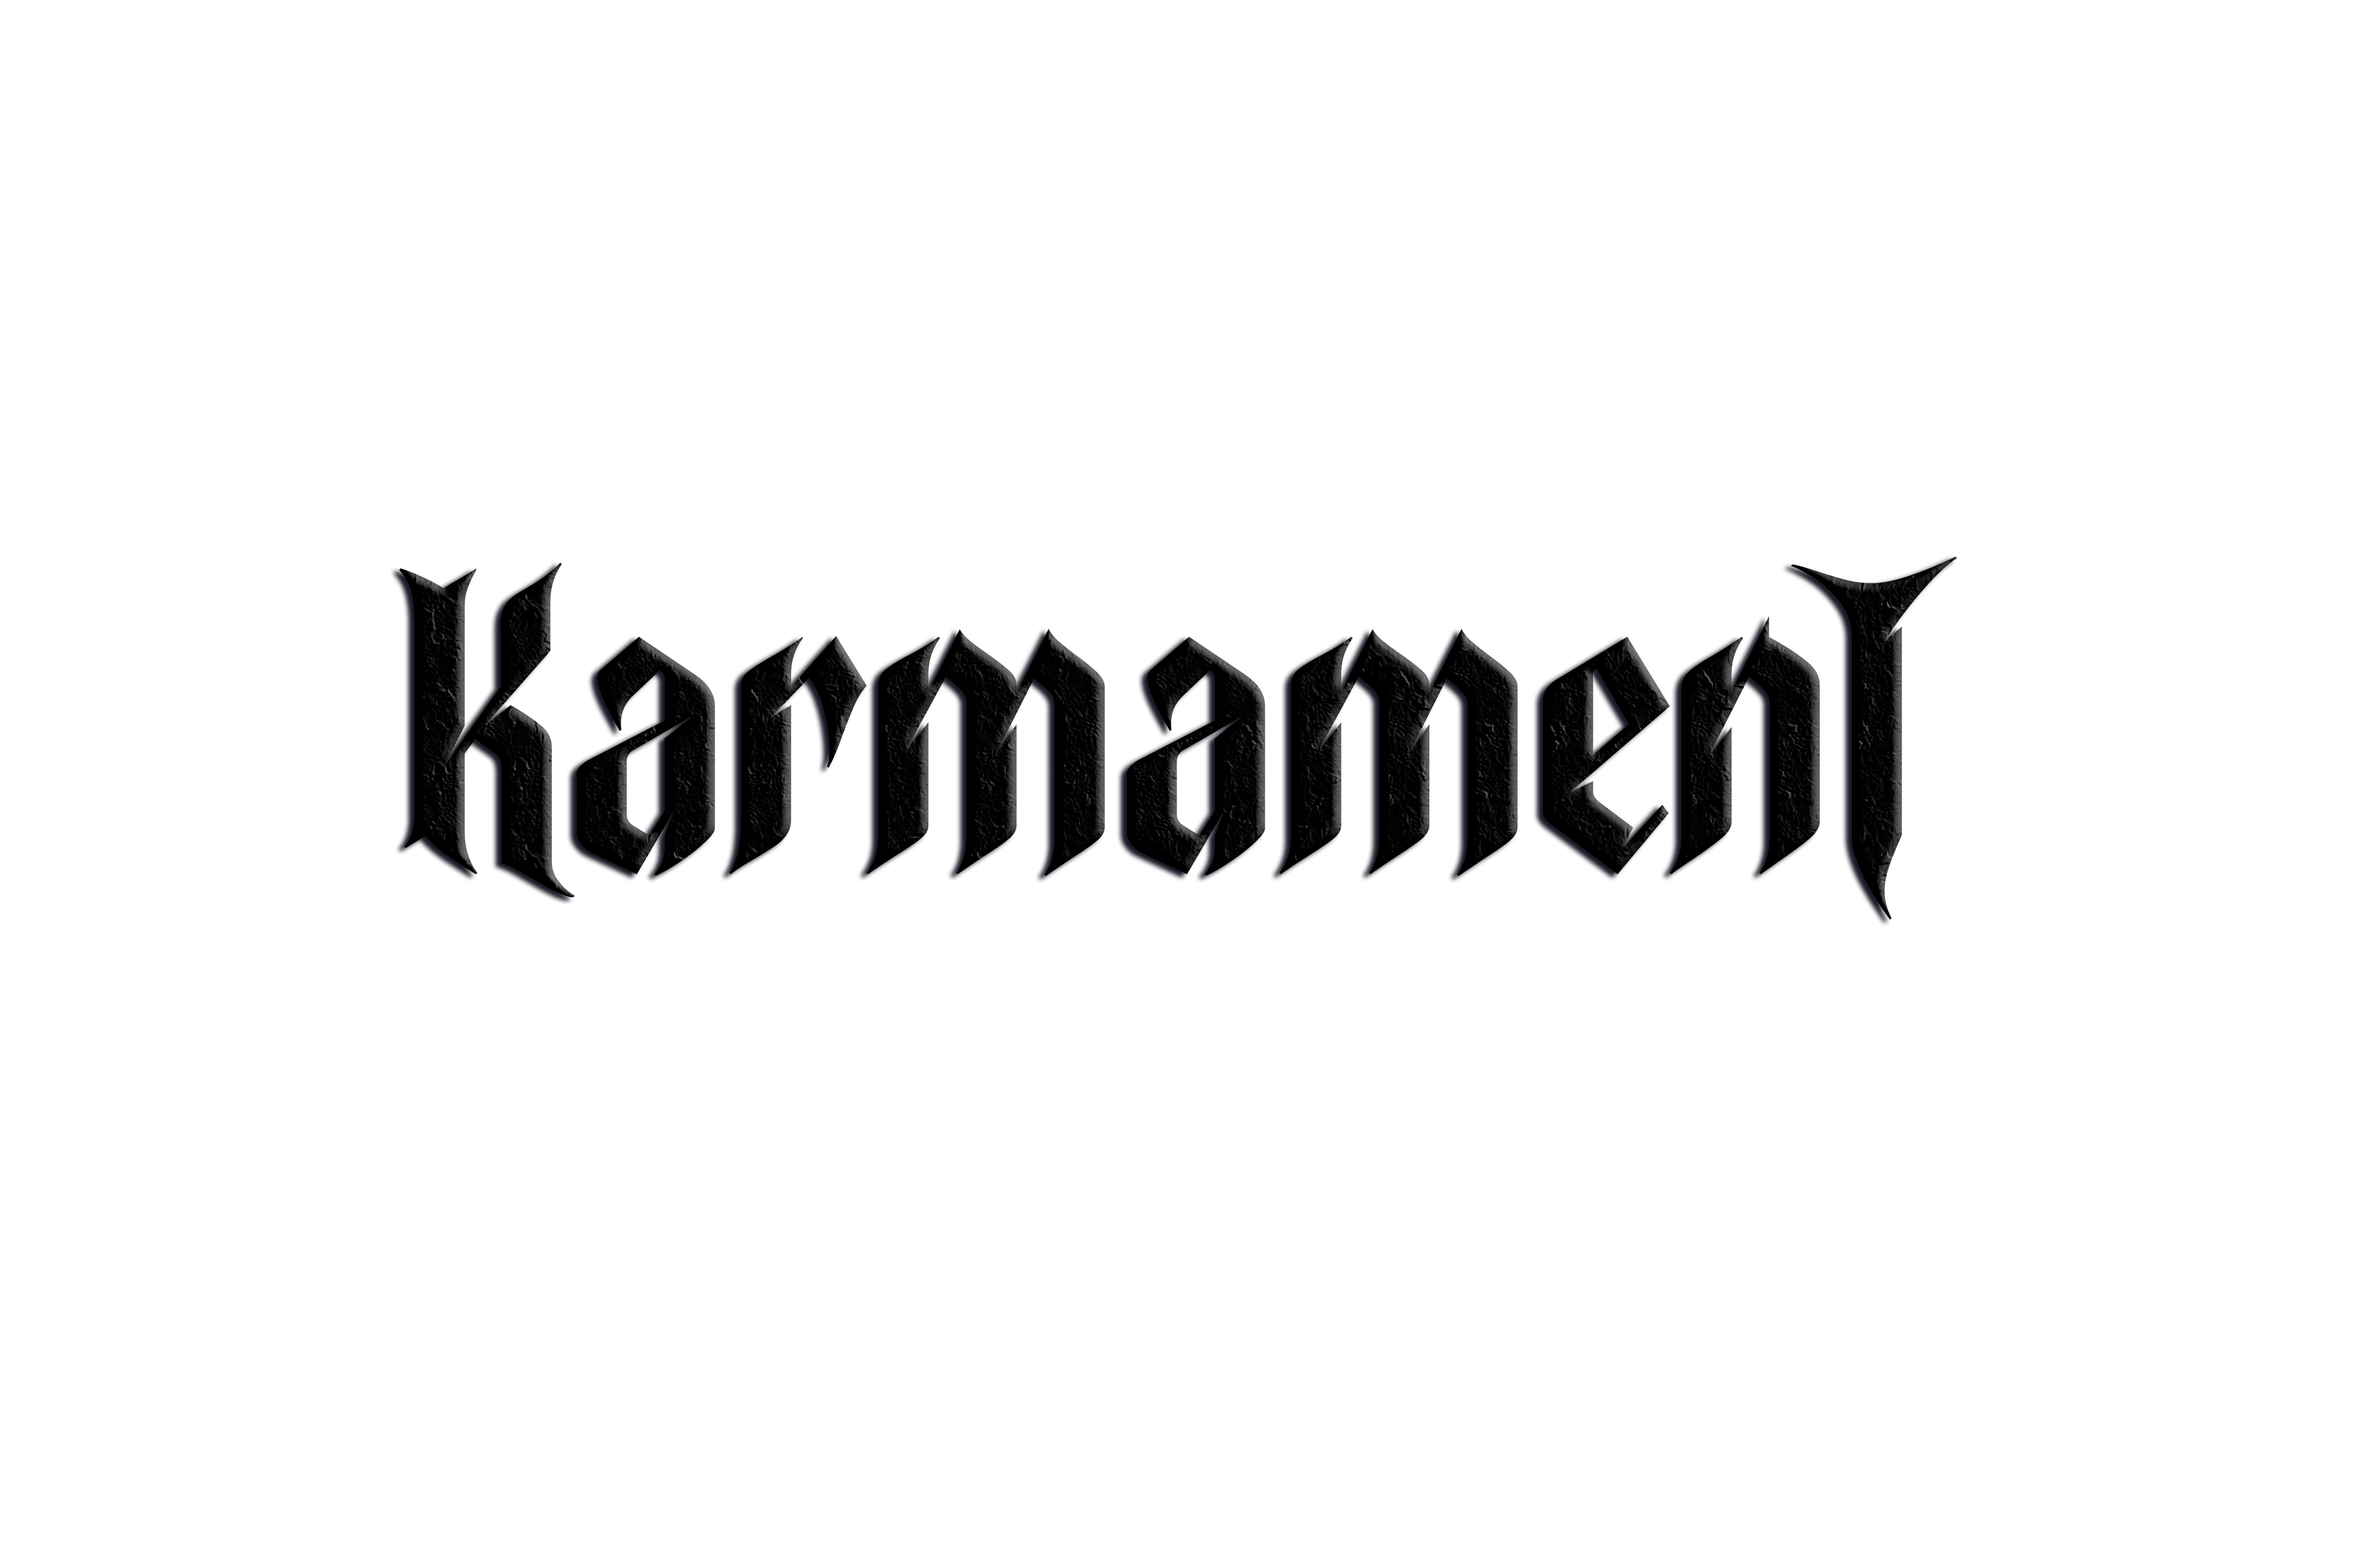 Black Karmament logo with transparent background